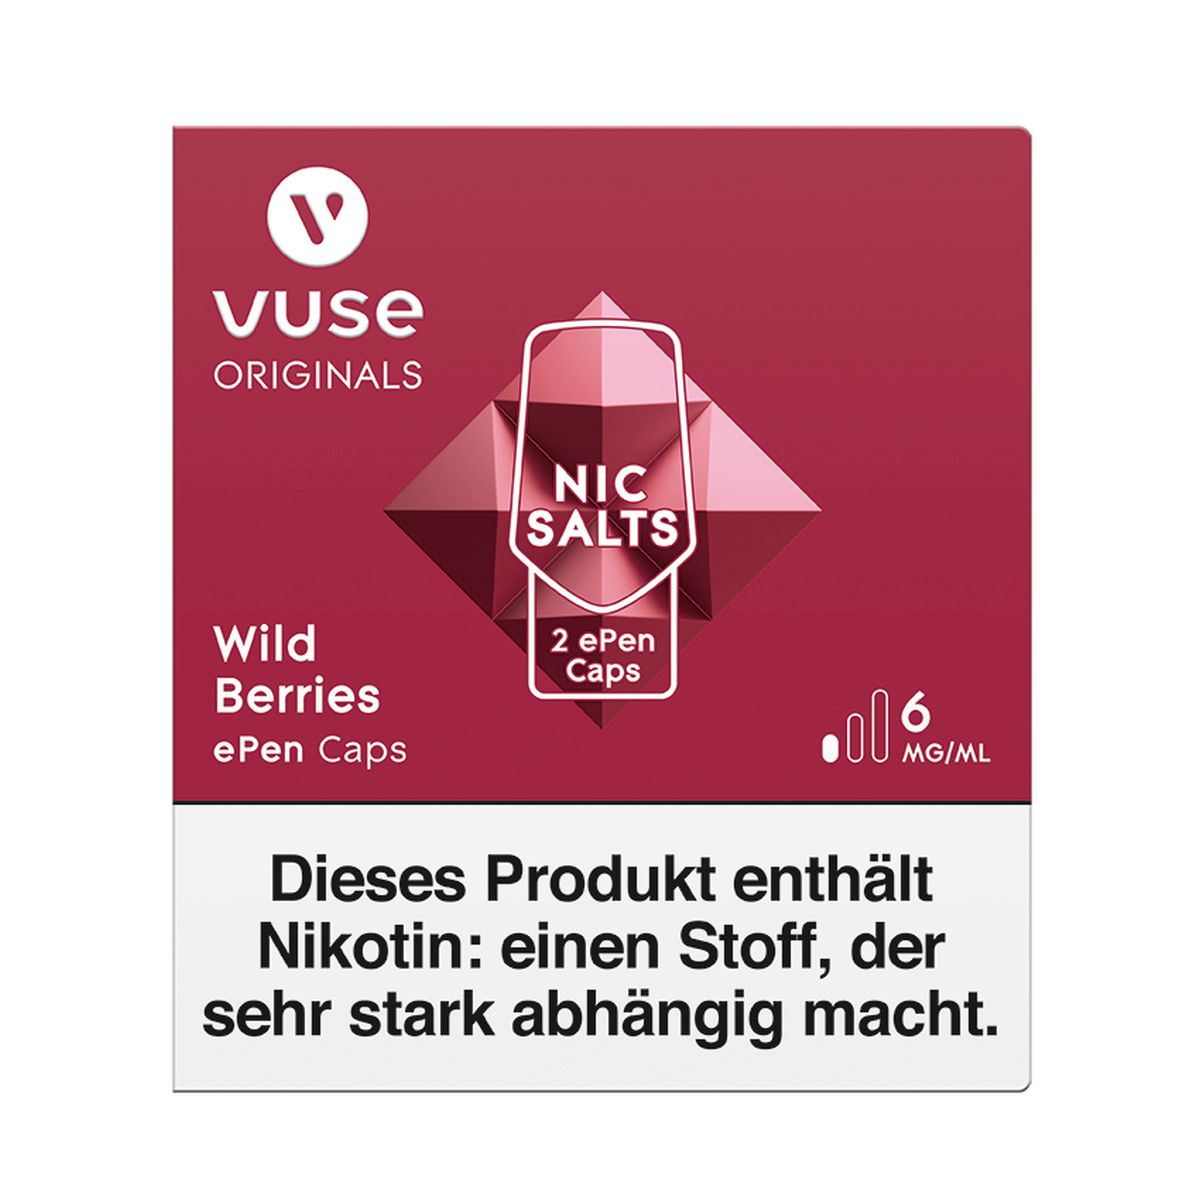 Vuse Vuse ePen Caps Wild Berries Nic Salts 6mg Nikotin 2ml bei www.Tabakring.de kaufen